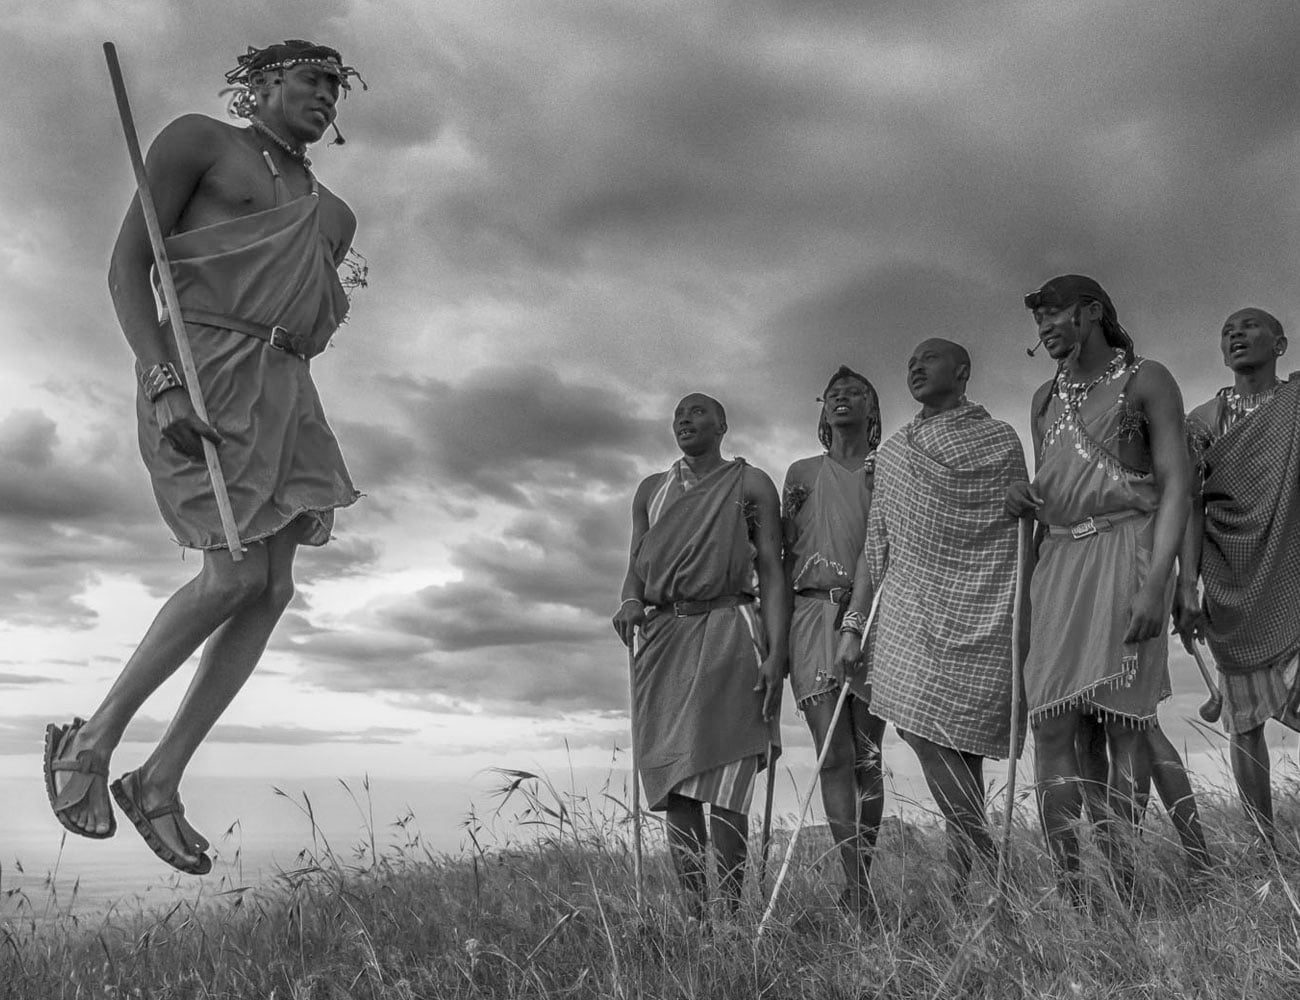 The People of Maasai Village